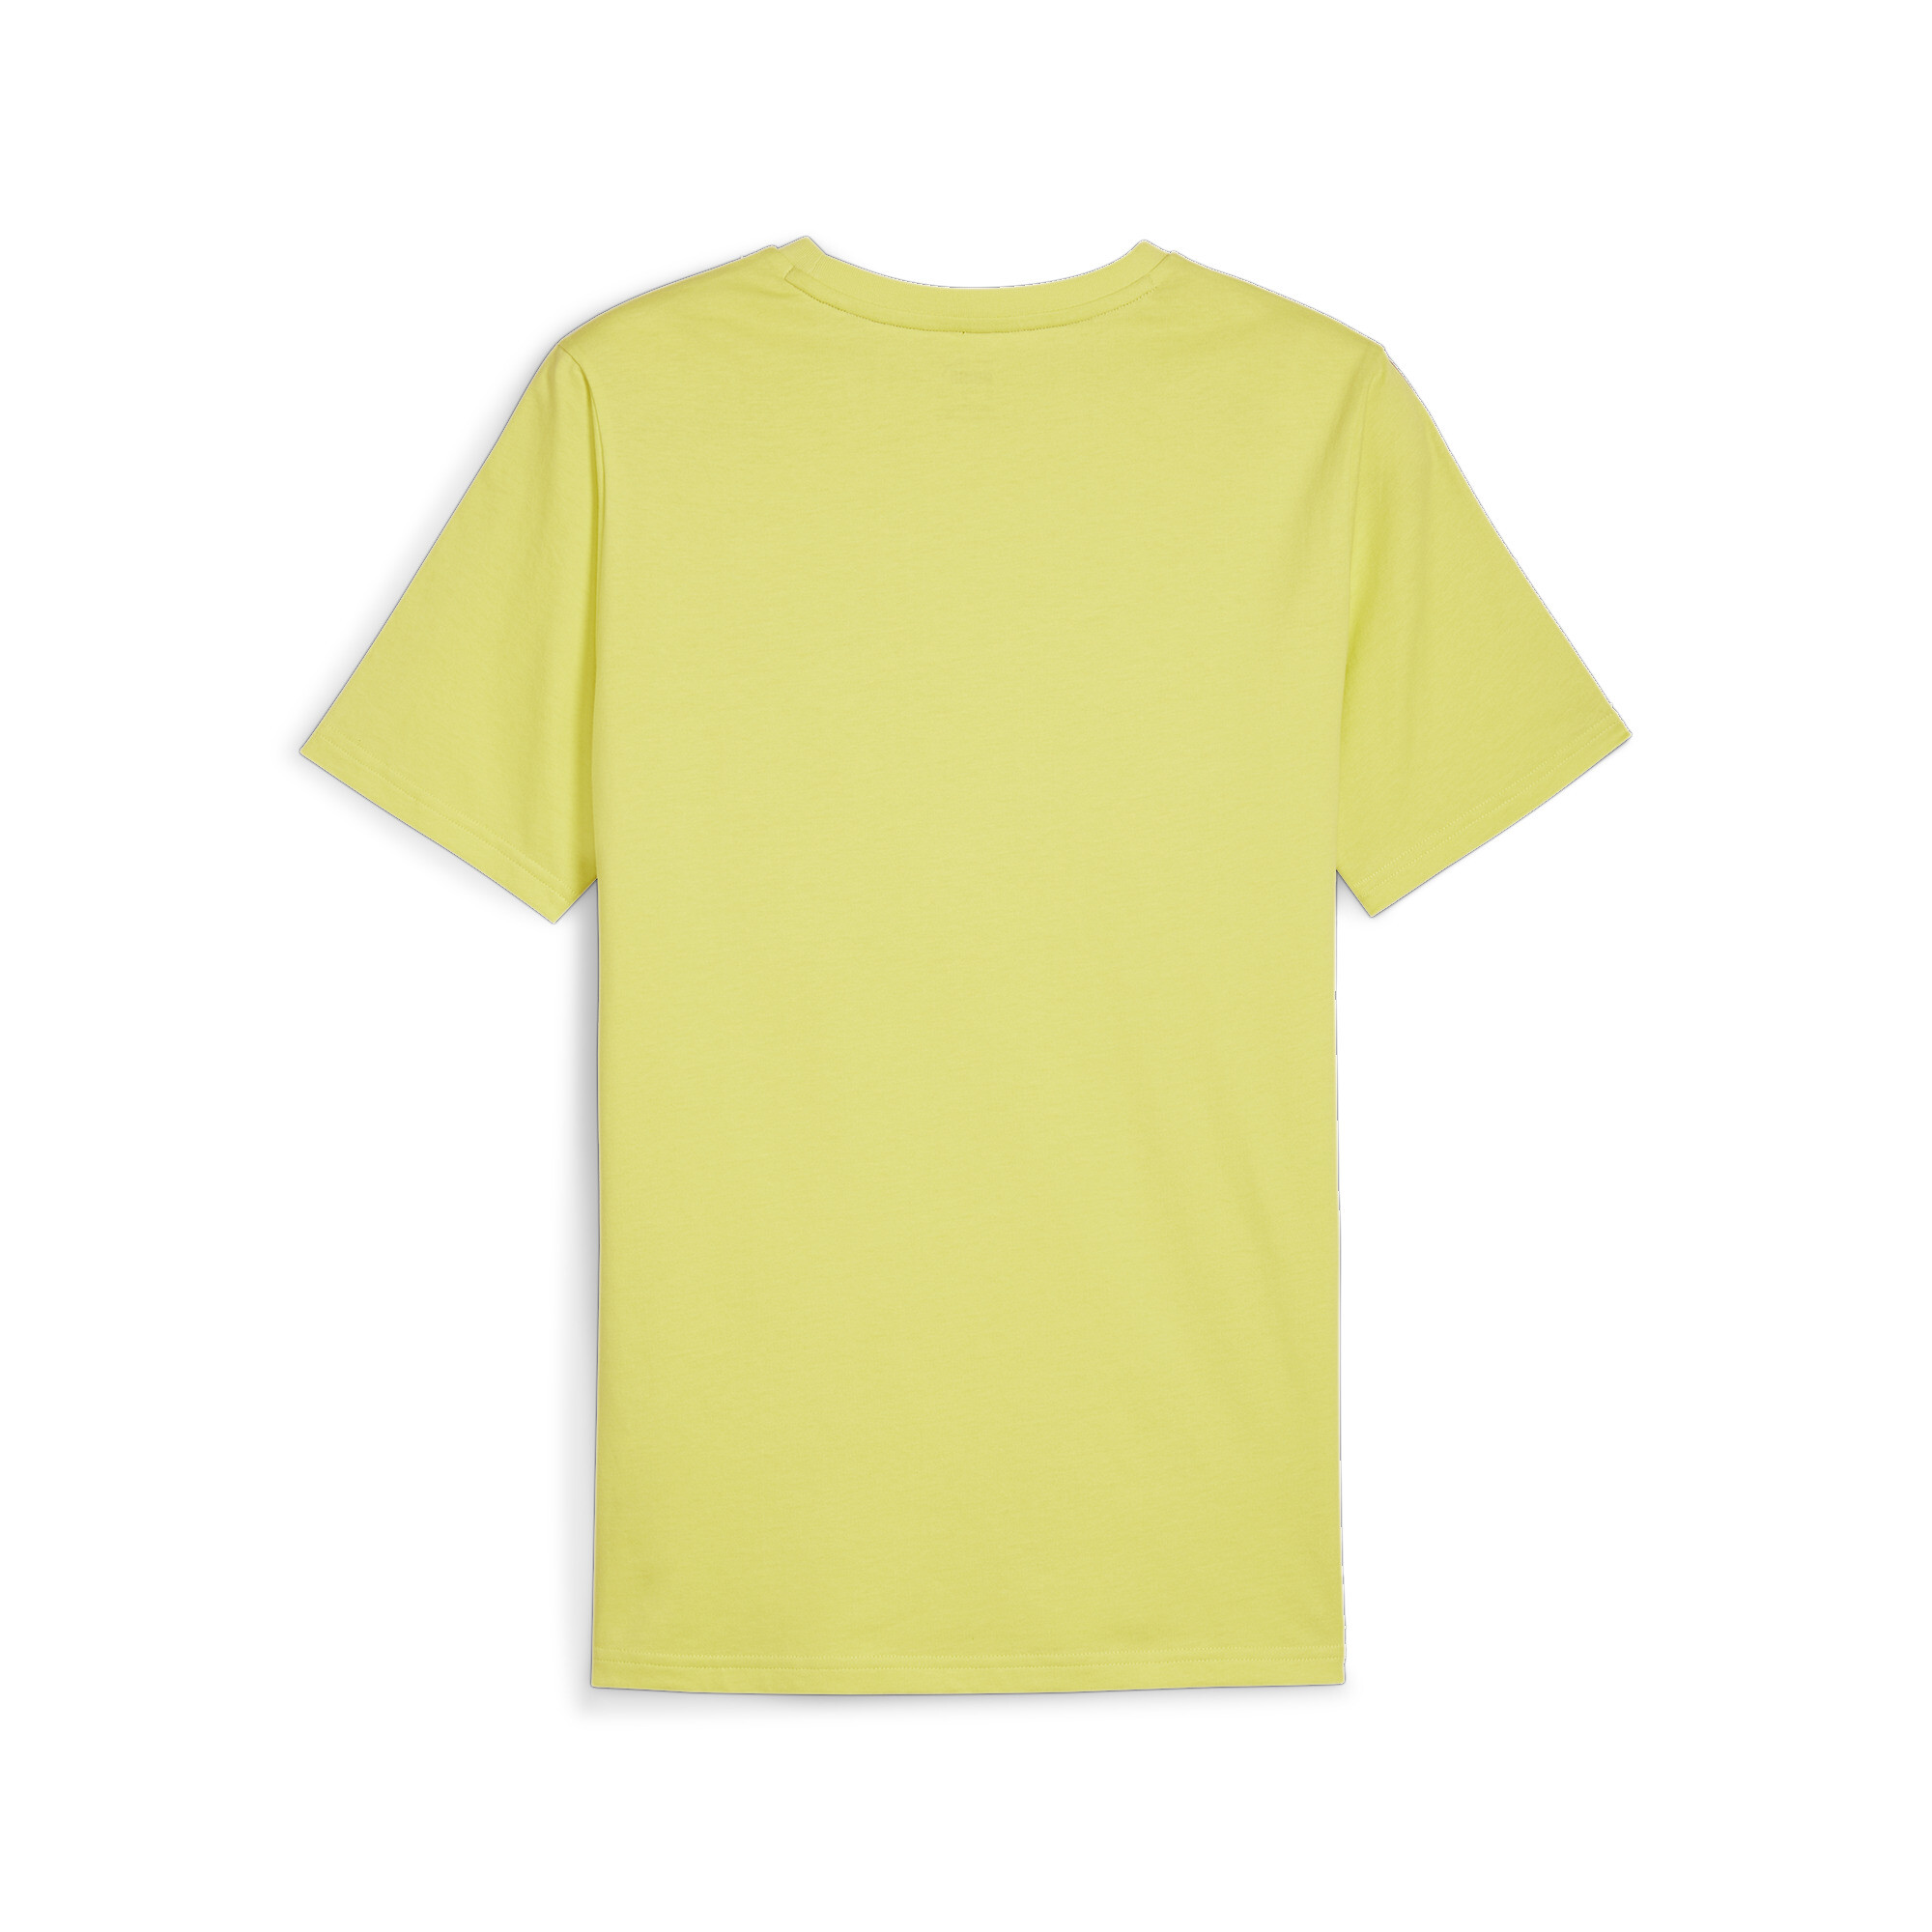 Men's Puma Essentials+ Tape's T-Shirt, Green, Size L, Clothing